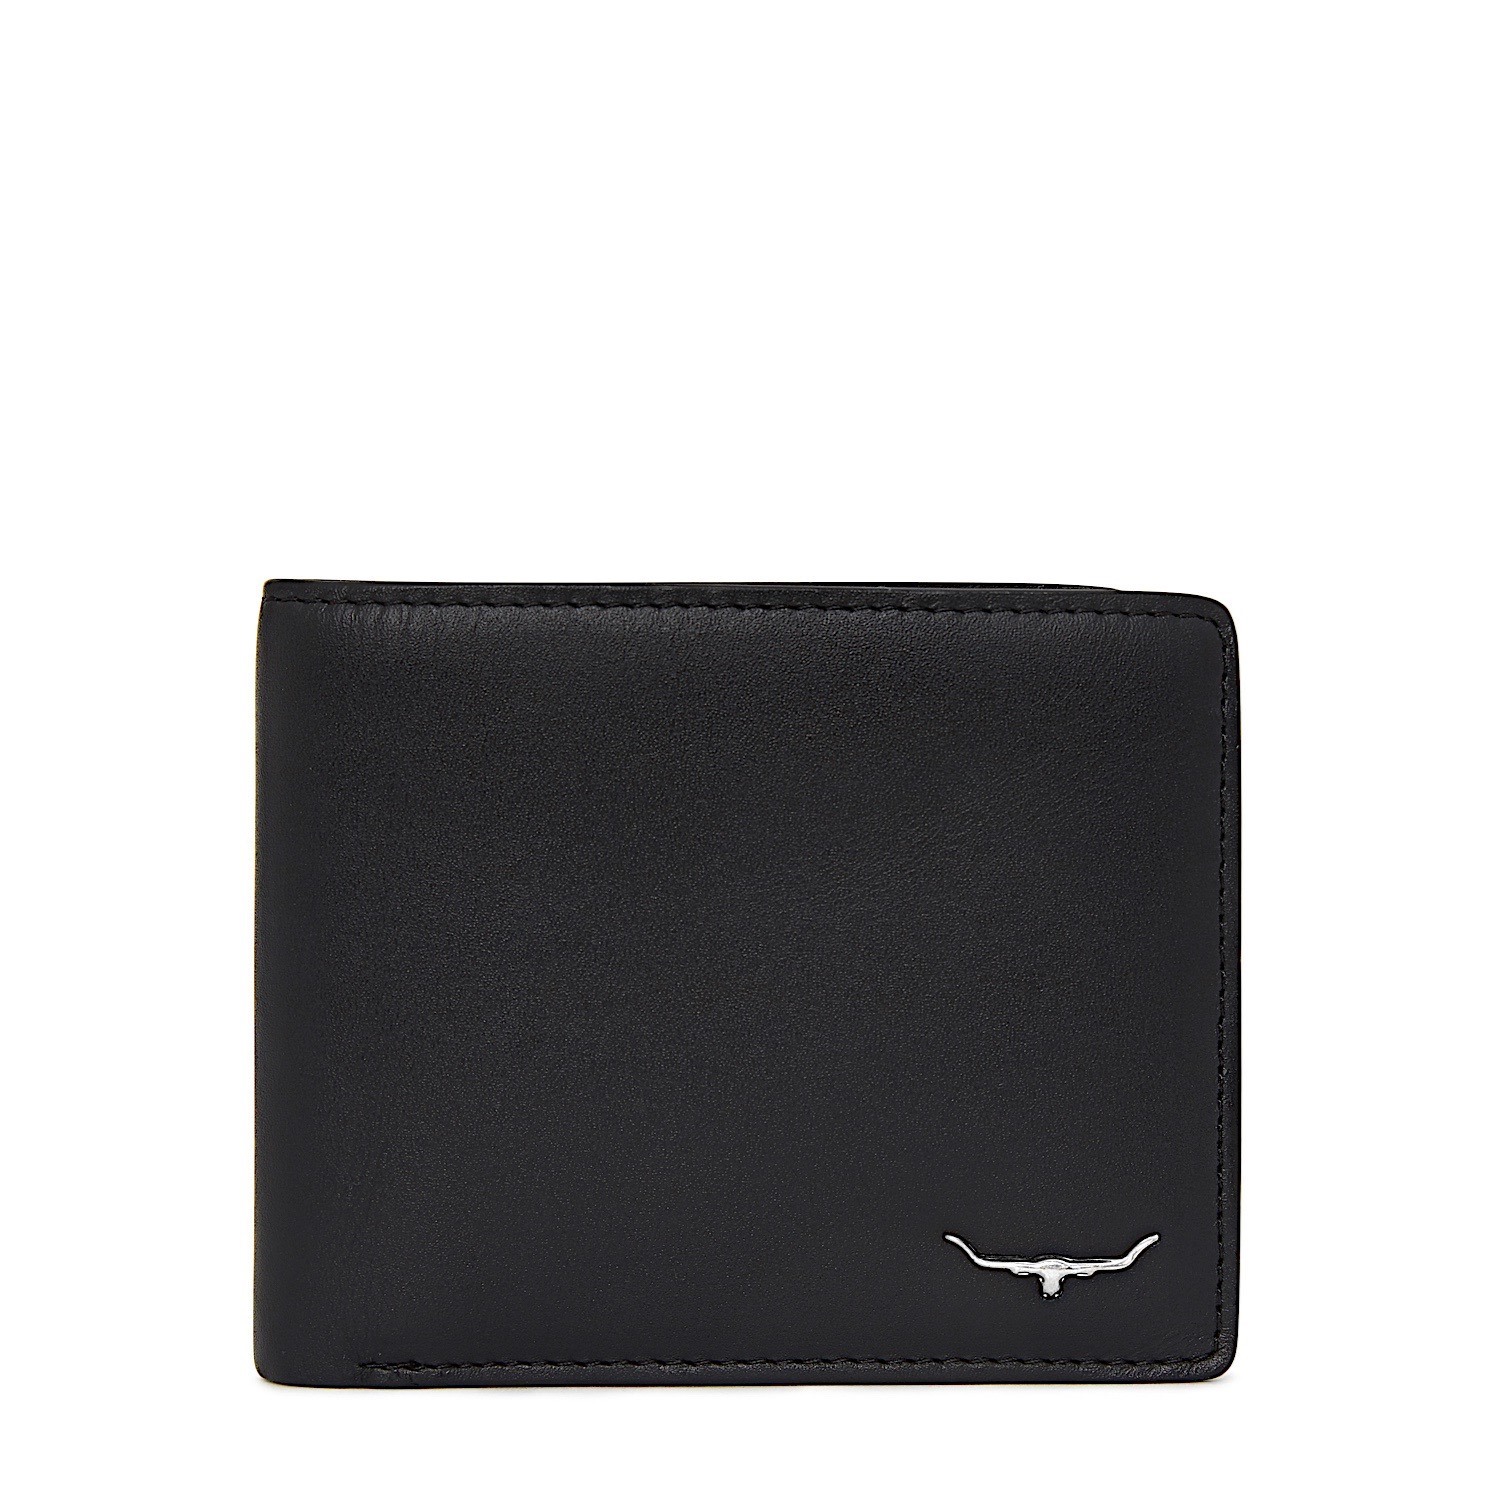 RM Williams City Slim Bi-Fold Wallet - Black | Port Phillip Shop